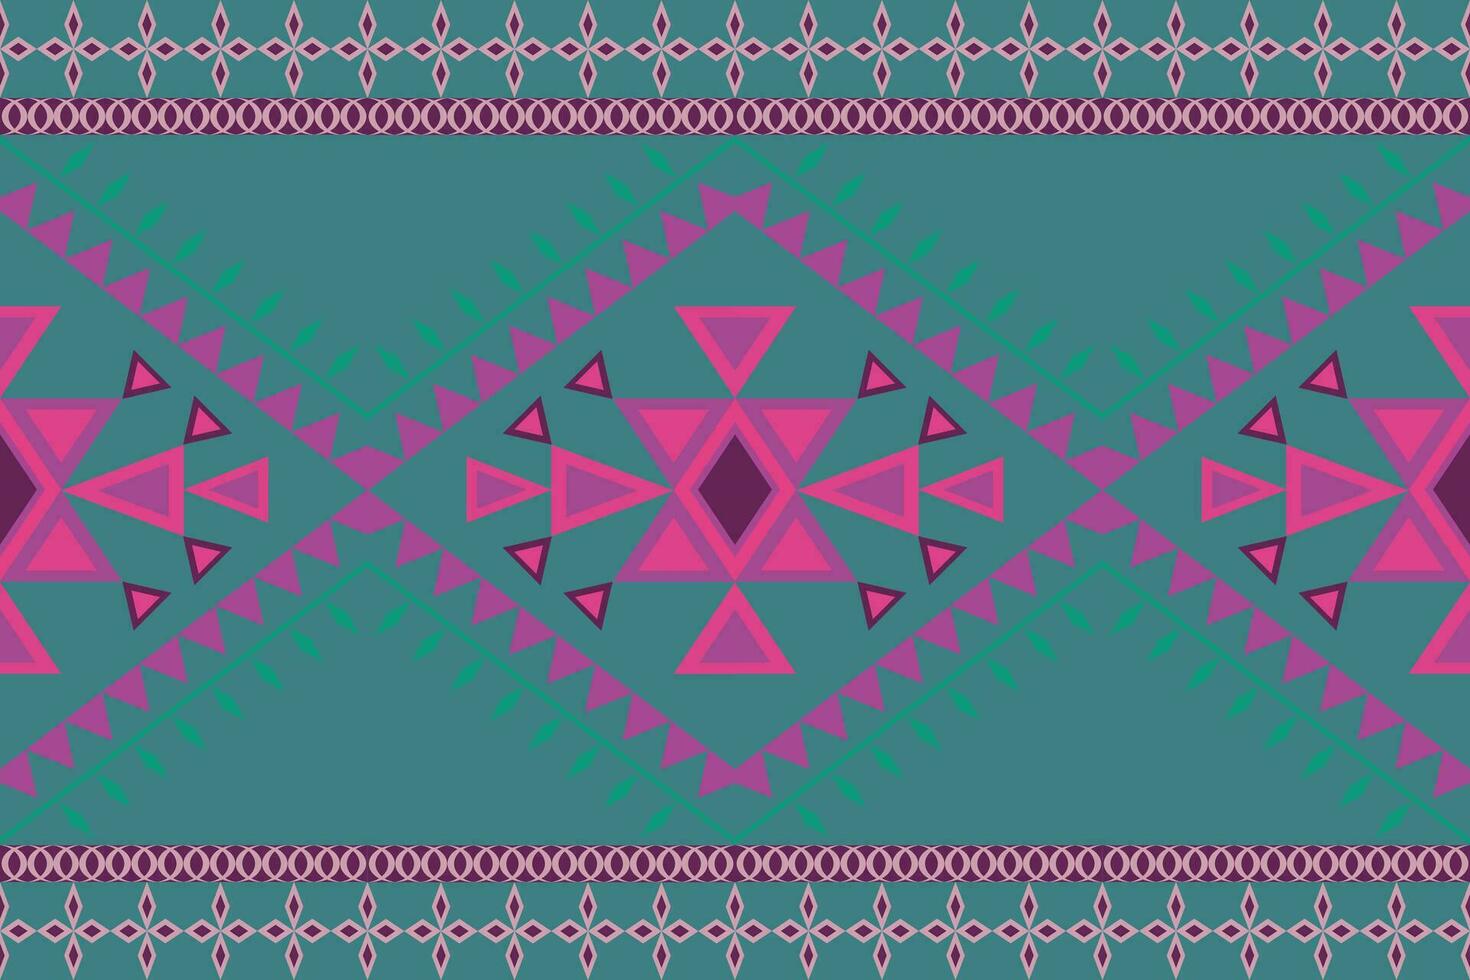 textil ikat étnico diseño de damasco frontera patrón.marco para mujer tela utilizar Mughal étnico resumen Clásico turco indio clásico textura. vector